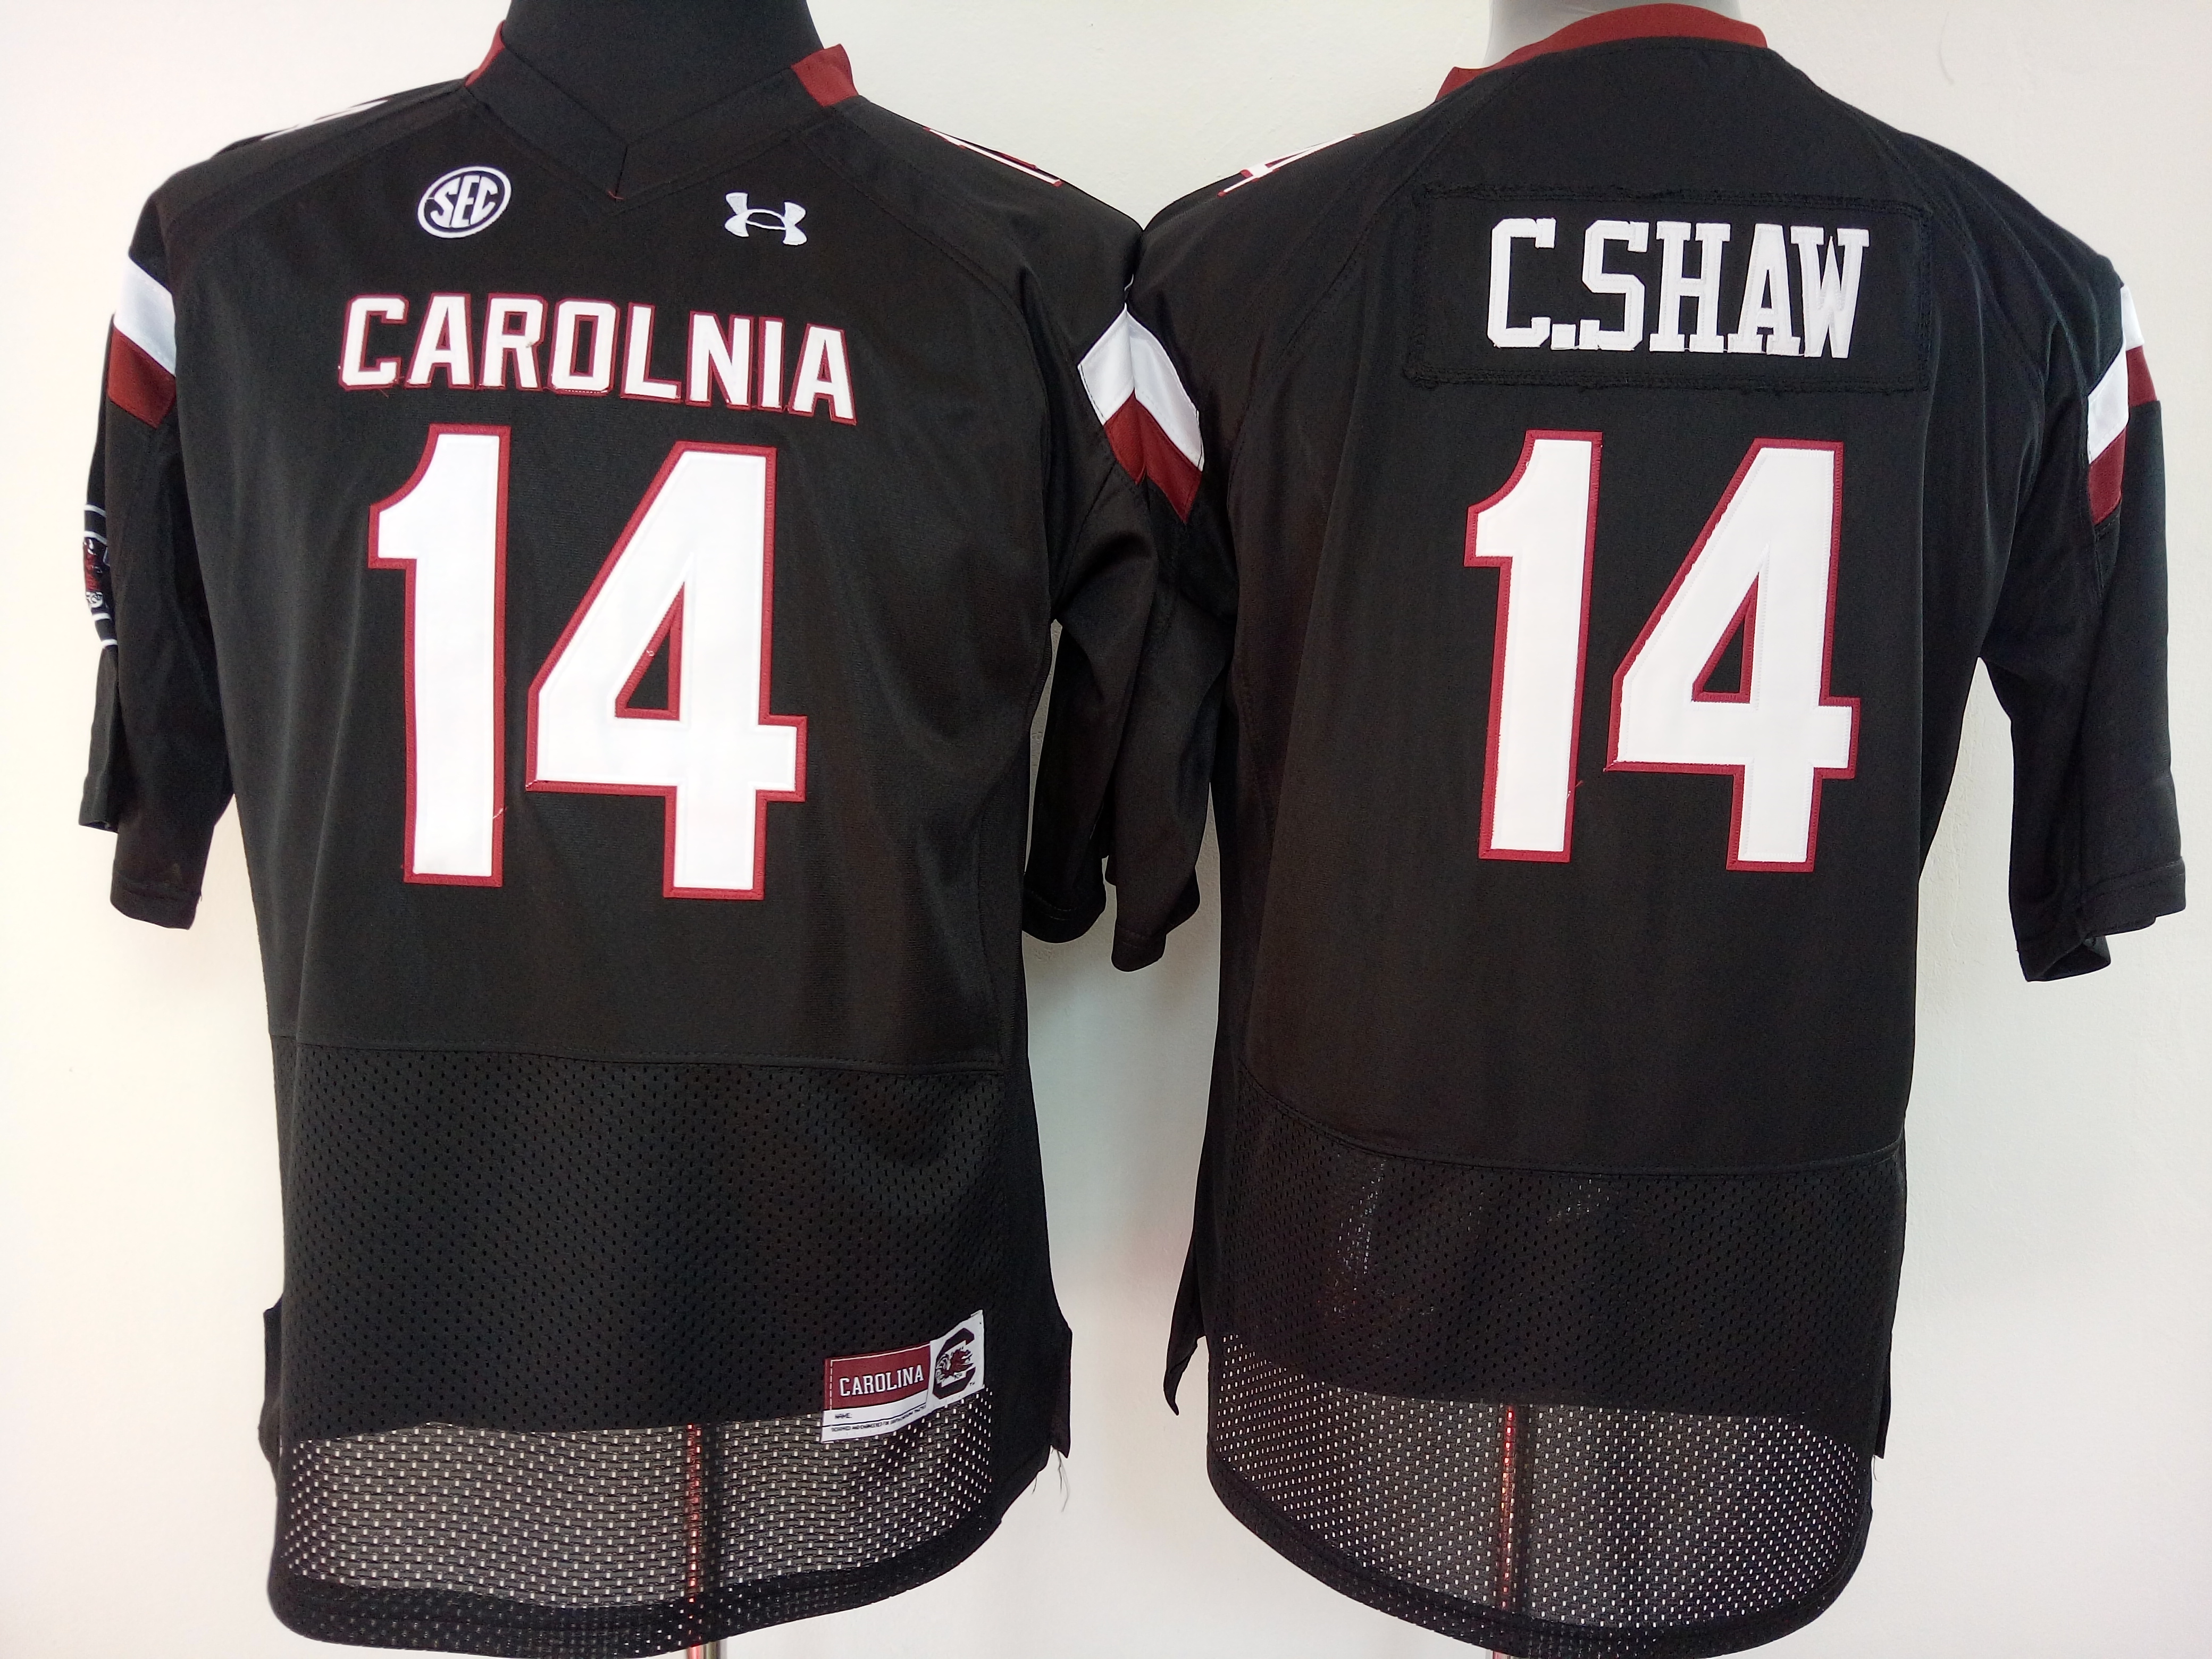 NCAA Womens South Carolina Gamecock Black 14 C shaw jerseys